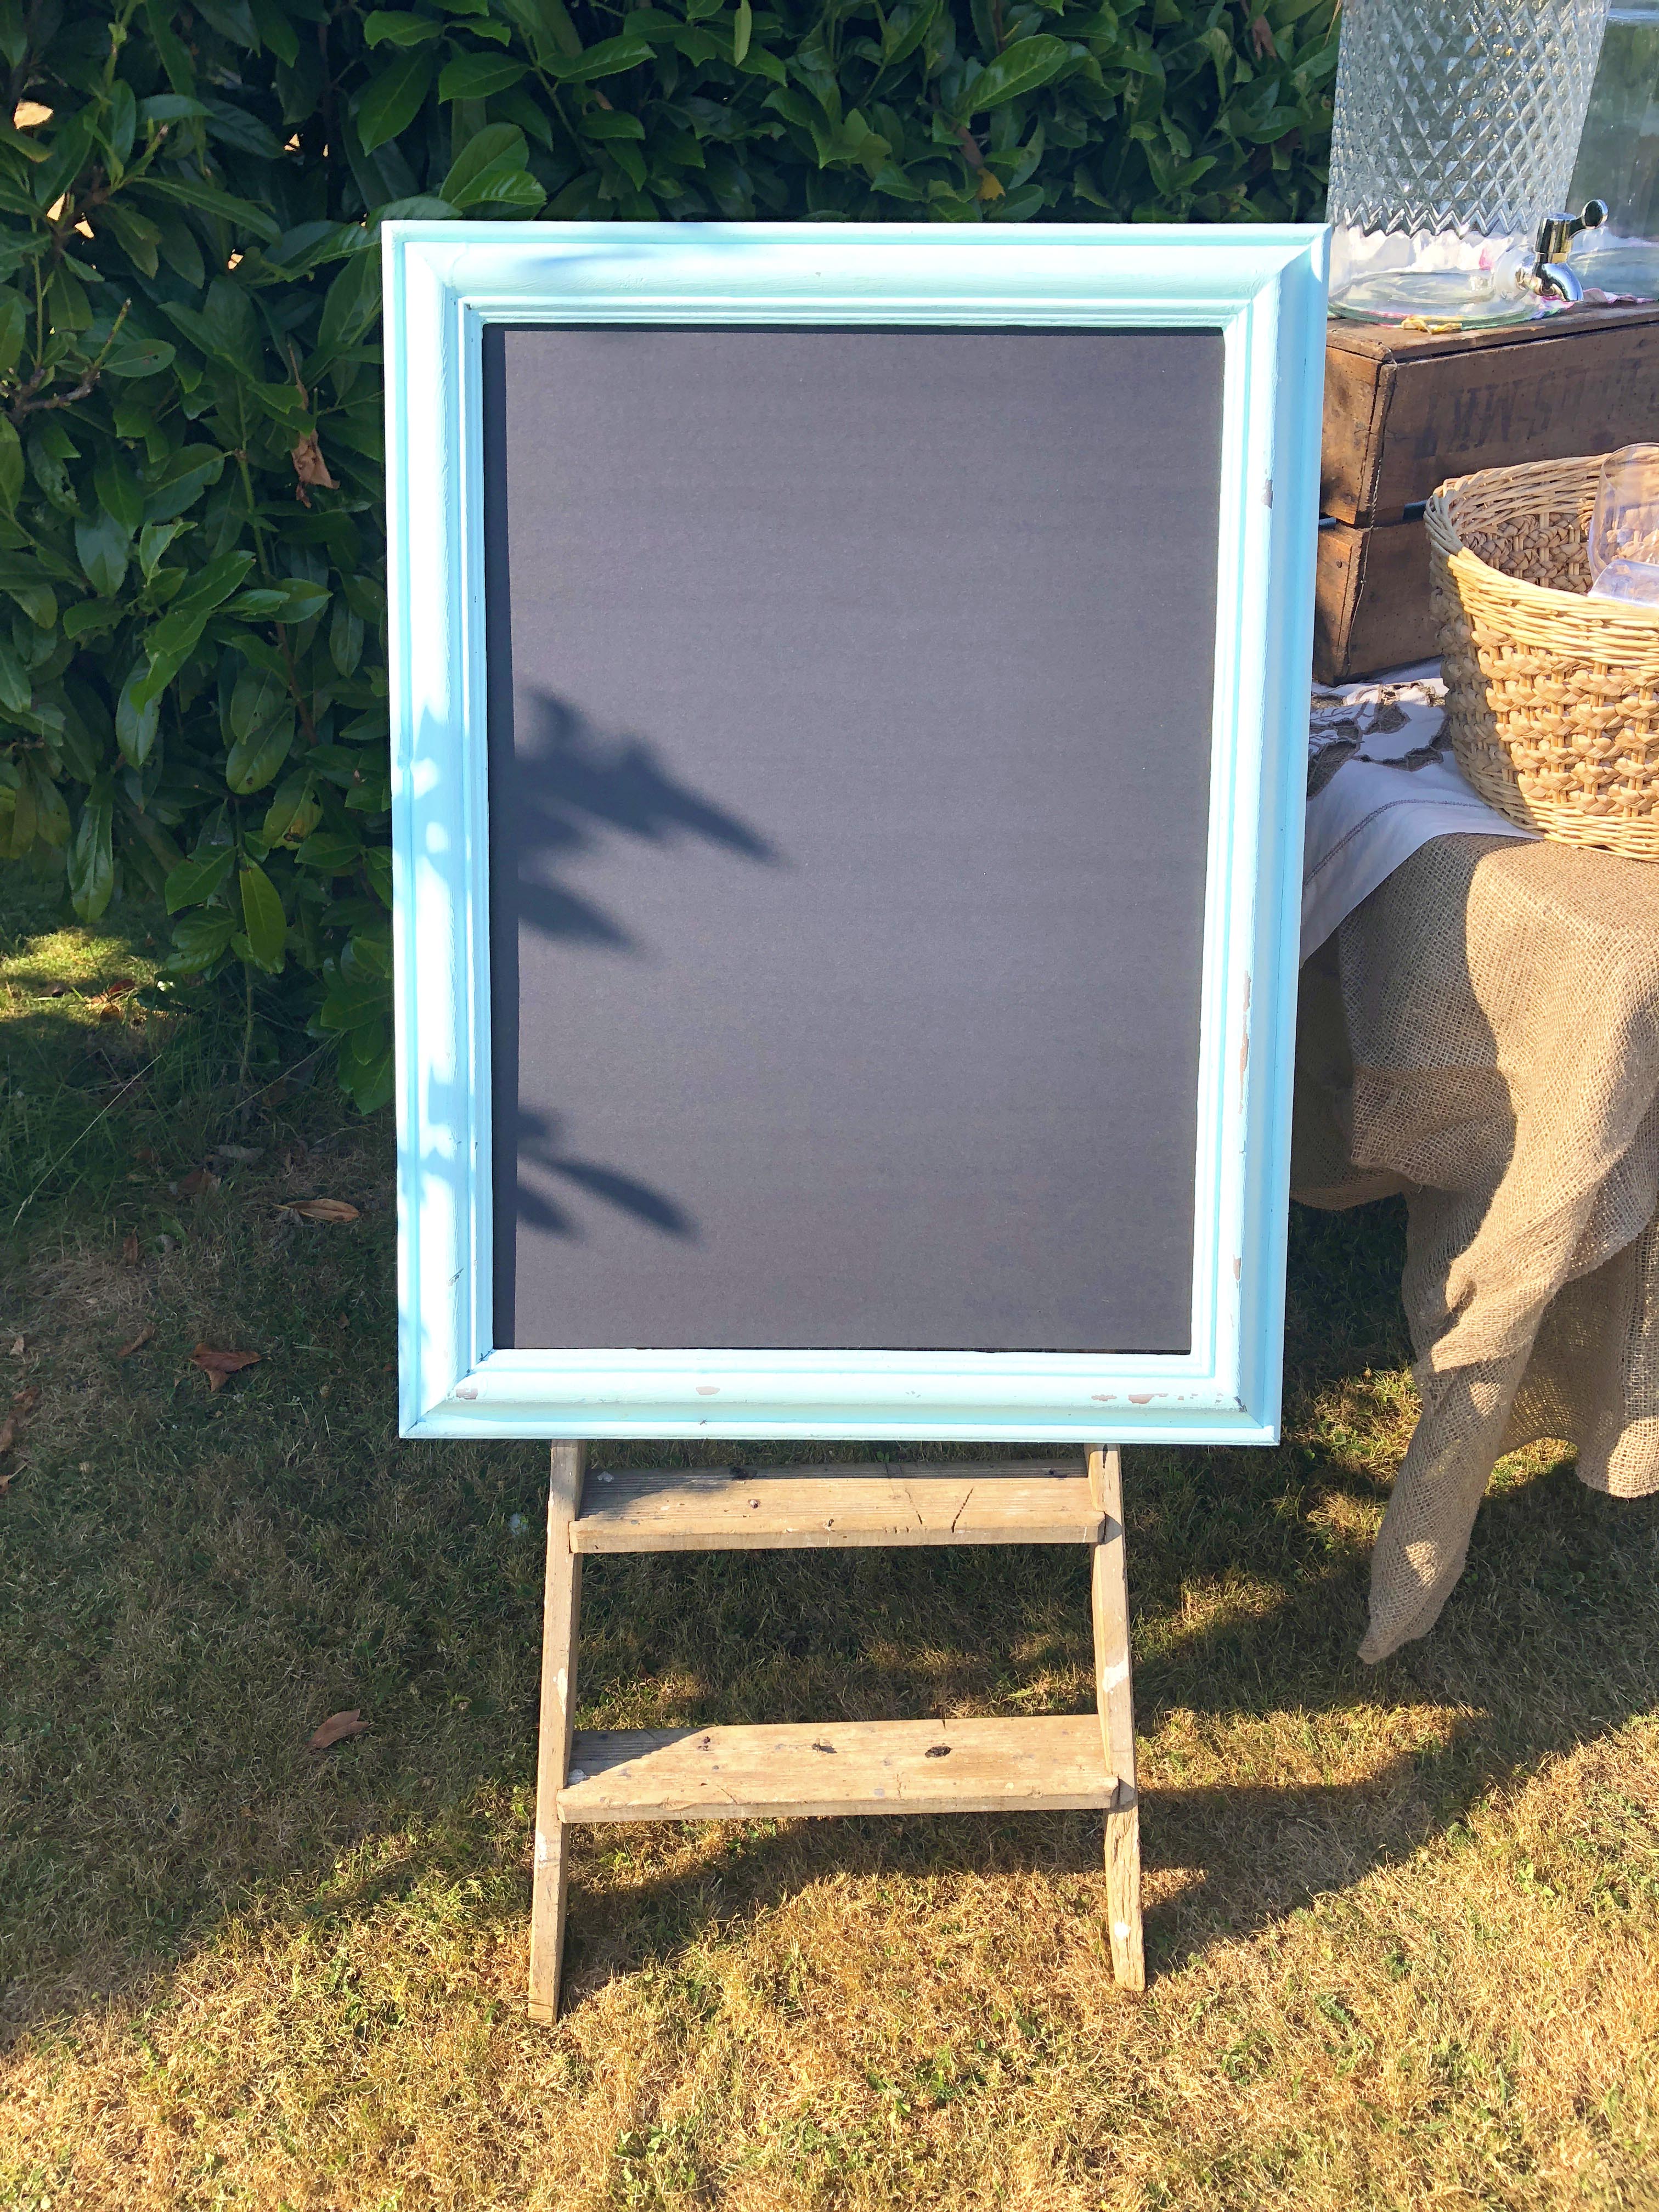 Instax board frame for a wedding or hen do displayed on a vintage ladder